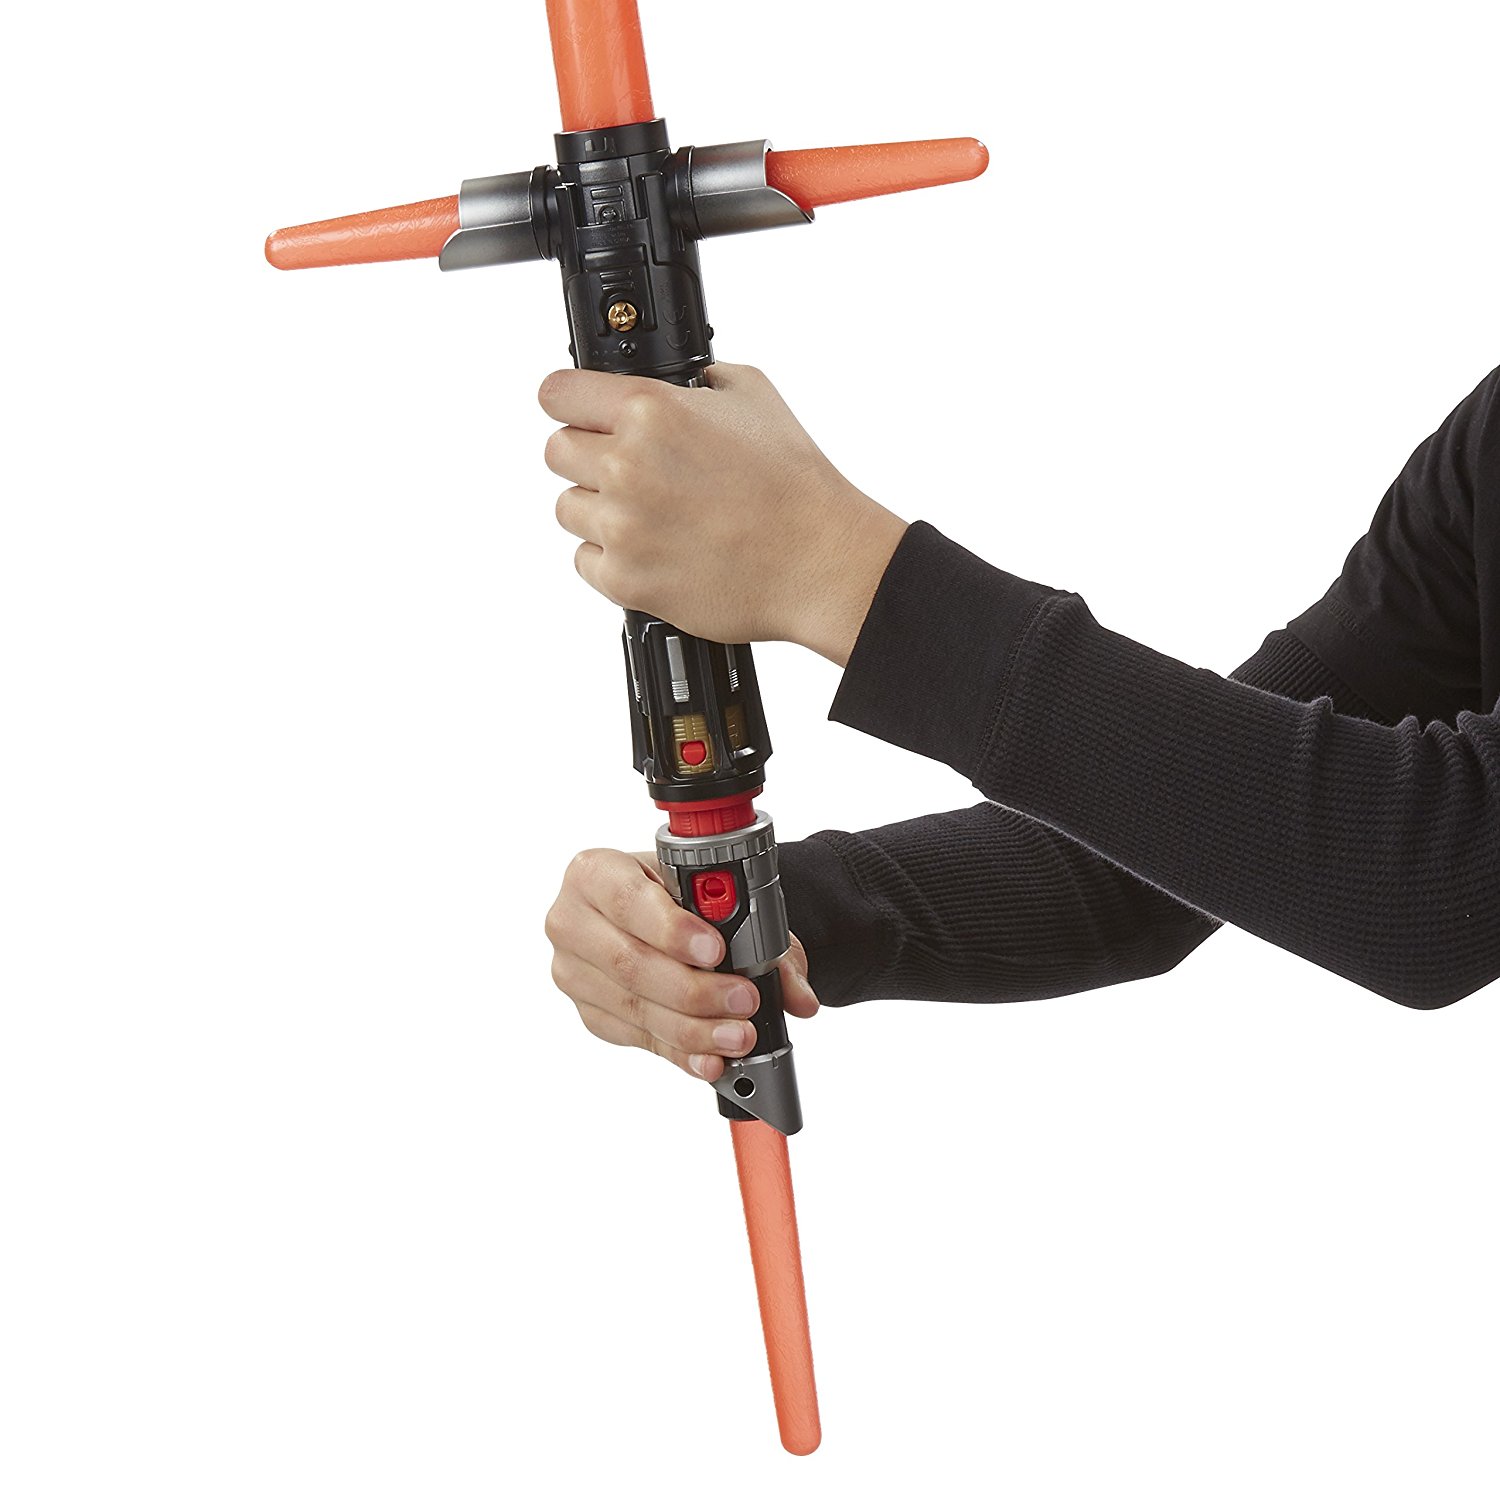 Disney Star Wars 'Kylo Ren' E7 Electronic Lightsaber Play Set Toy